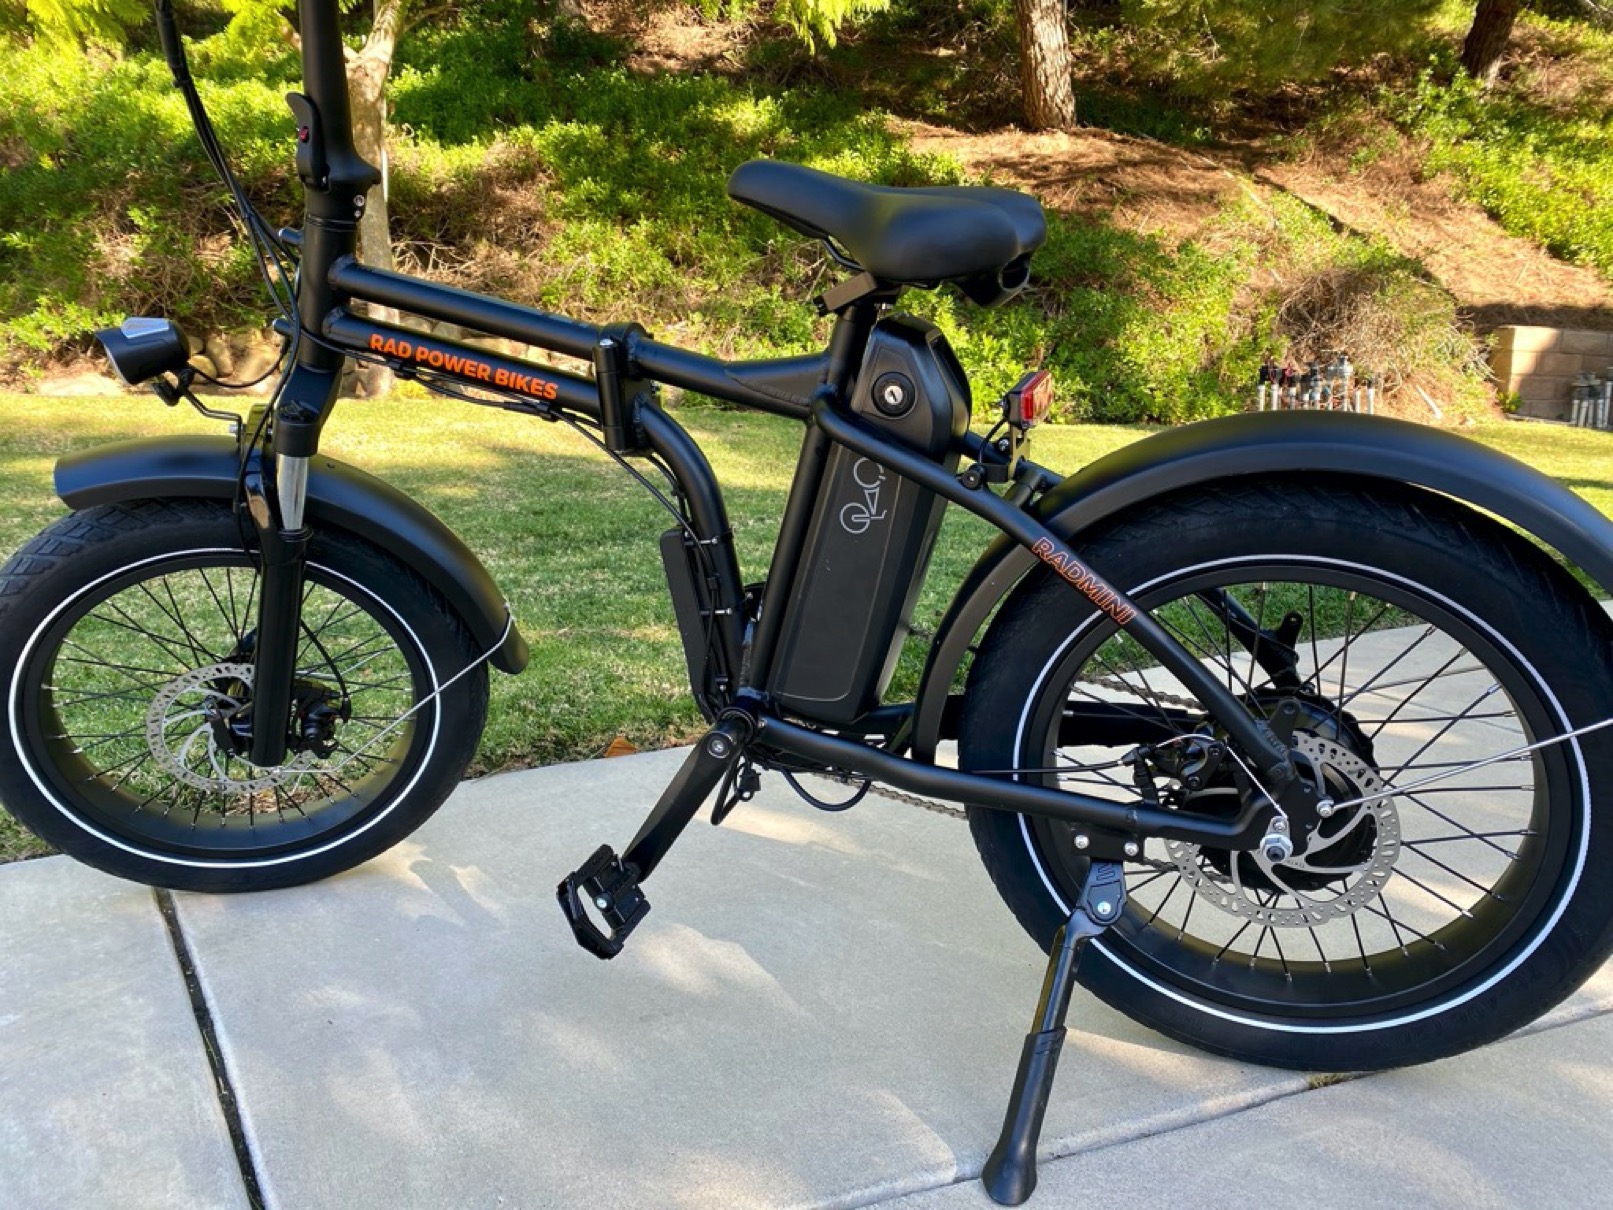 Black e-bike by Rad Power Bikes